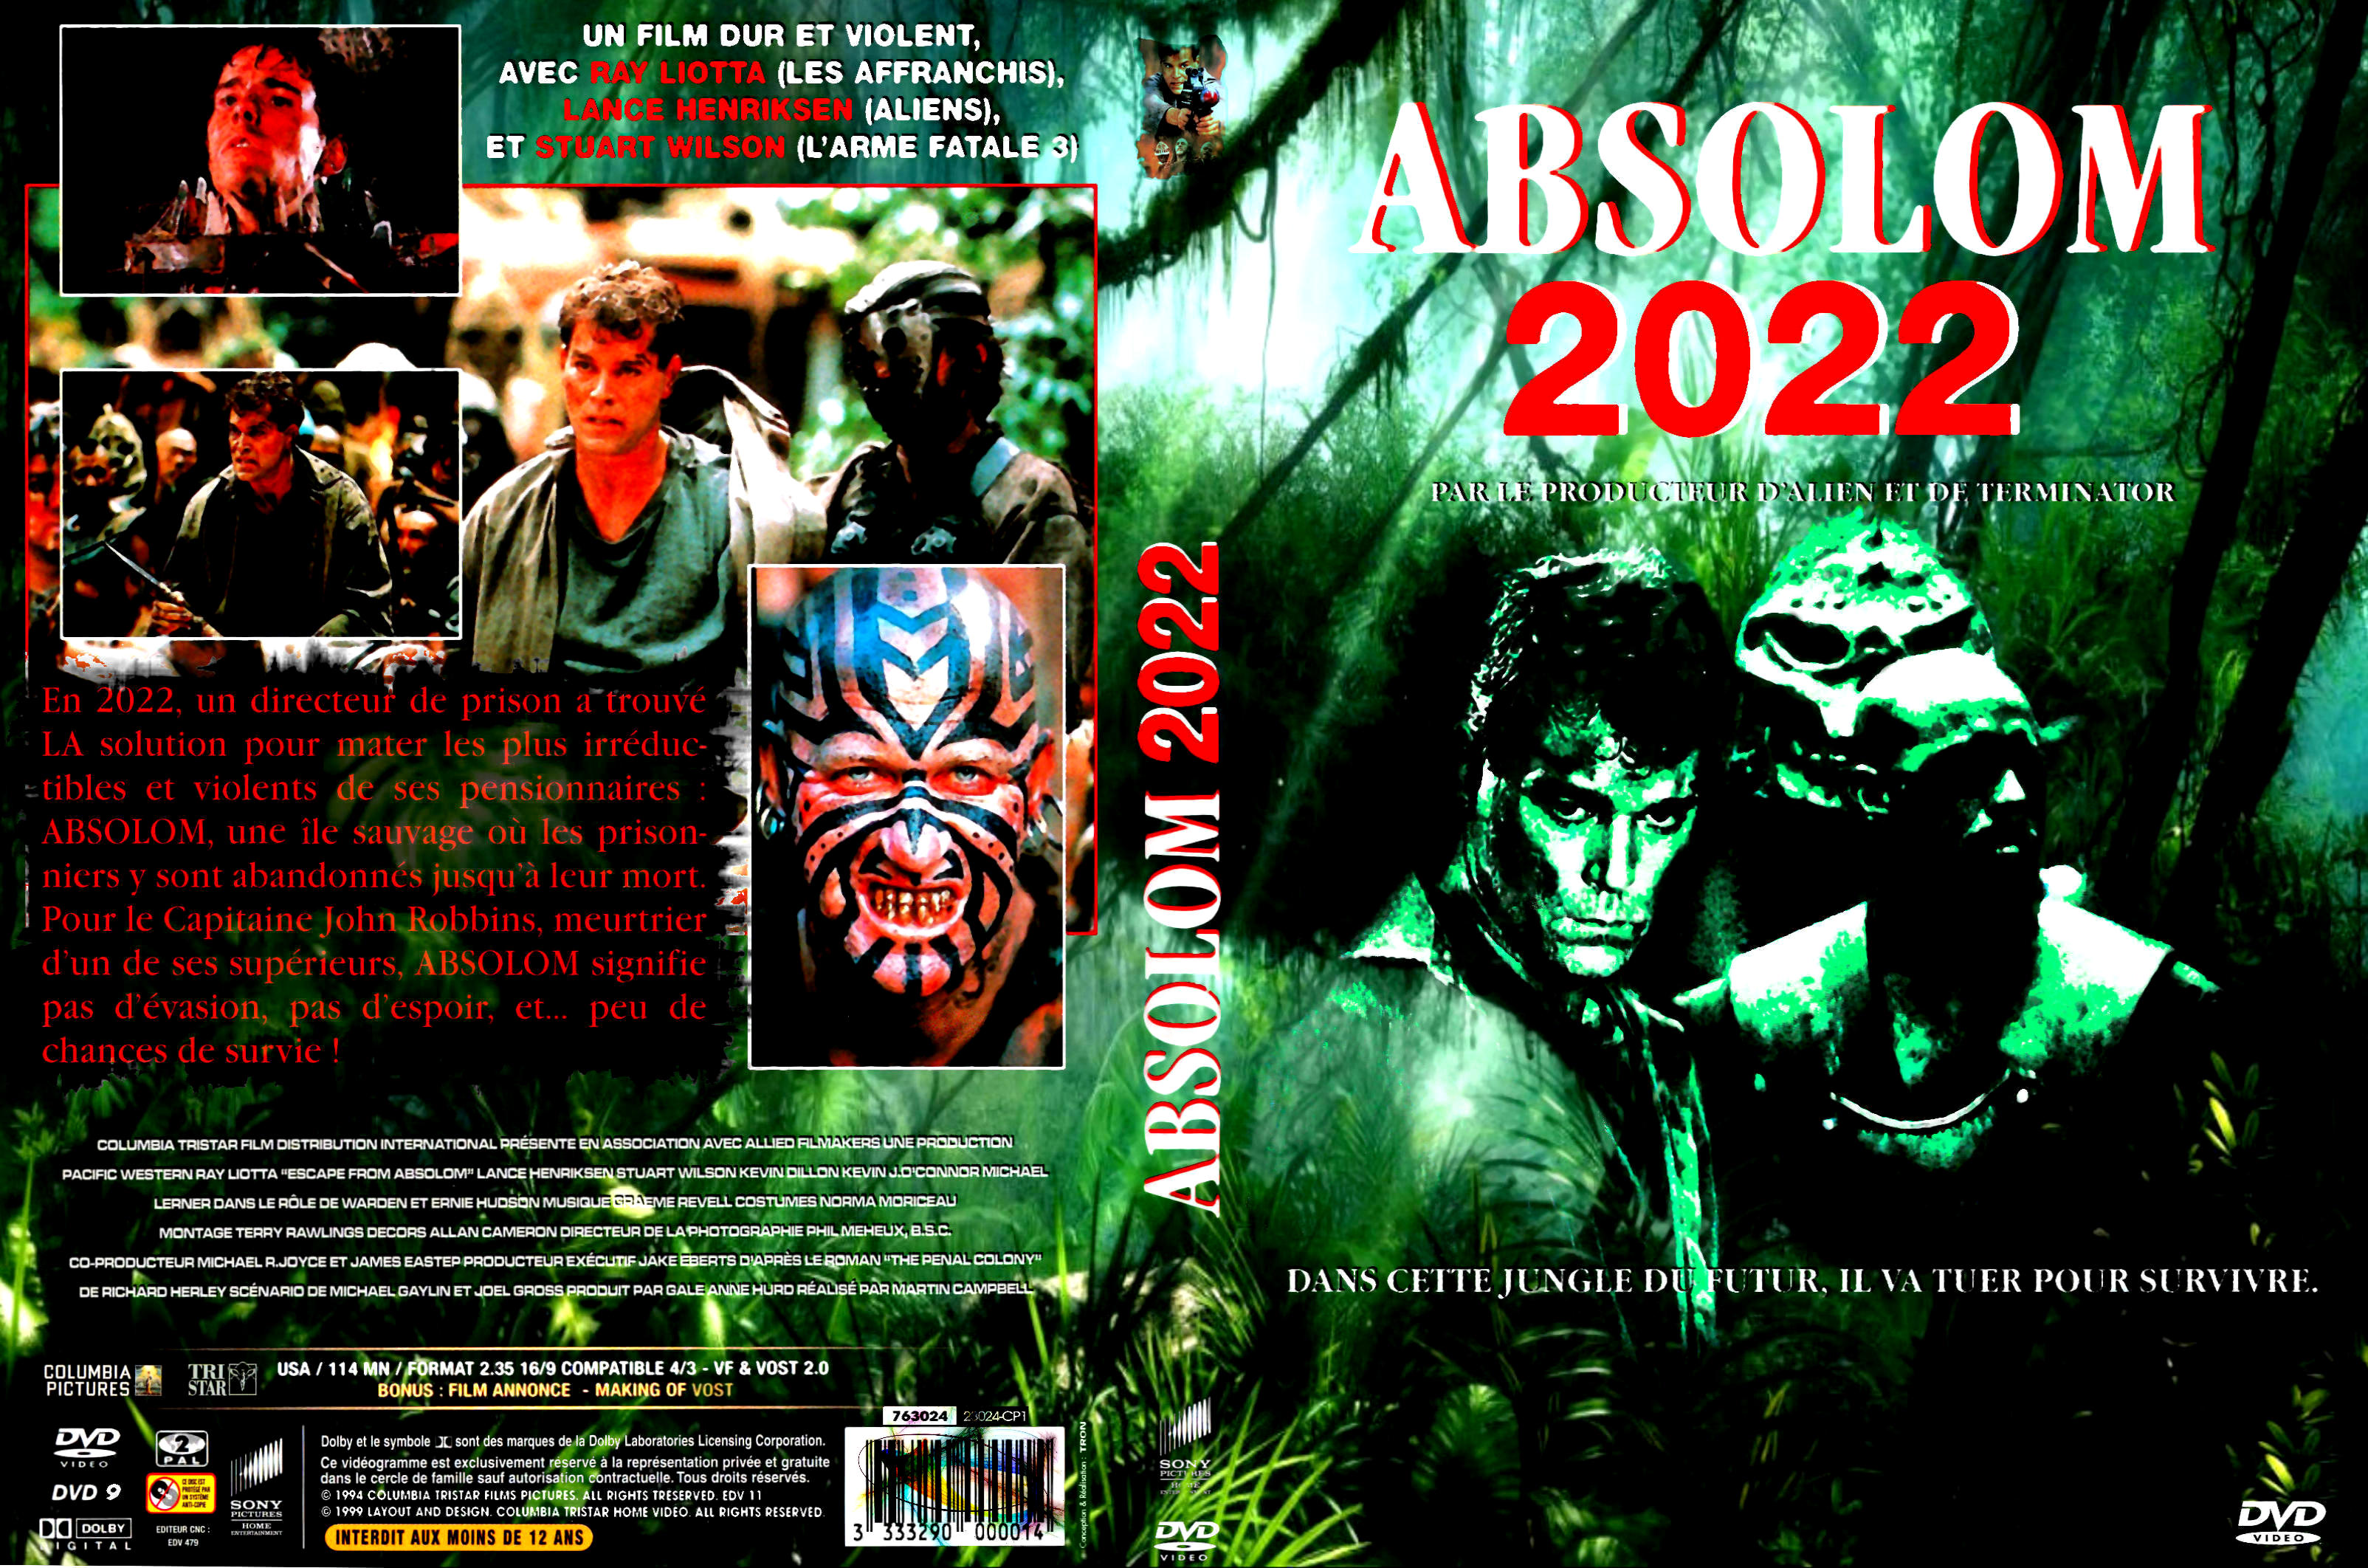 Jaquette DVD Absolom 2022 custom